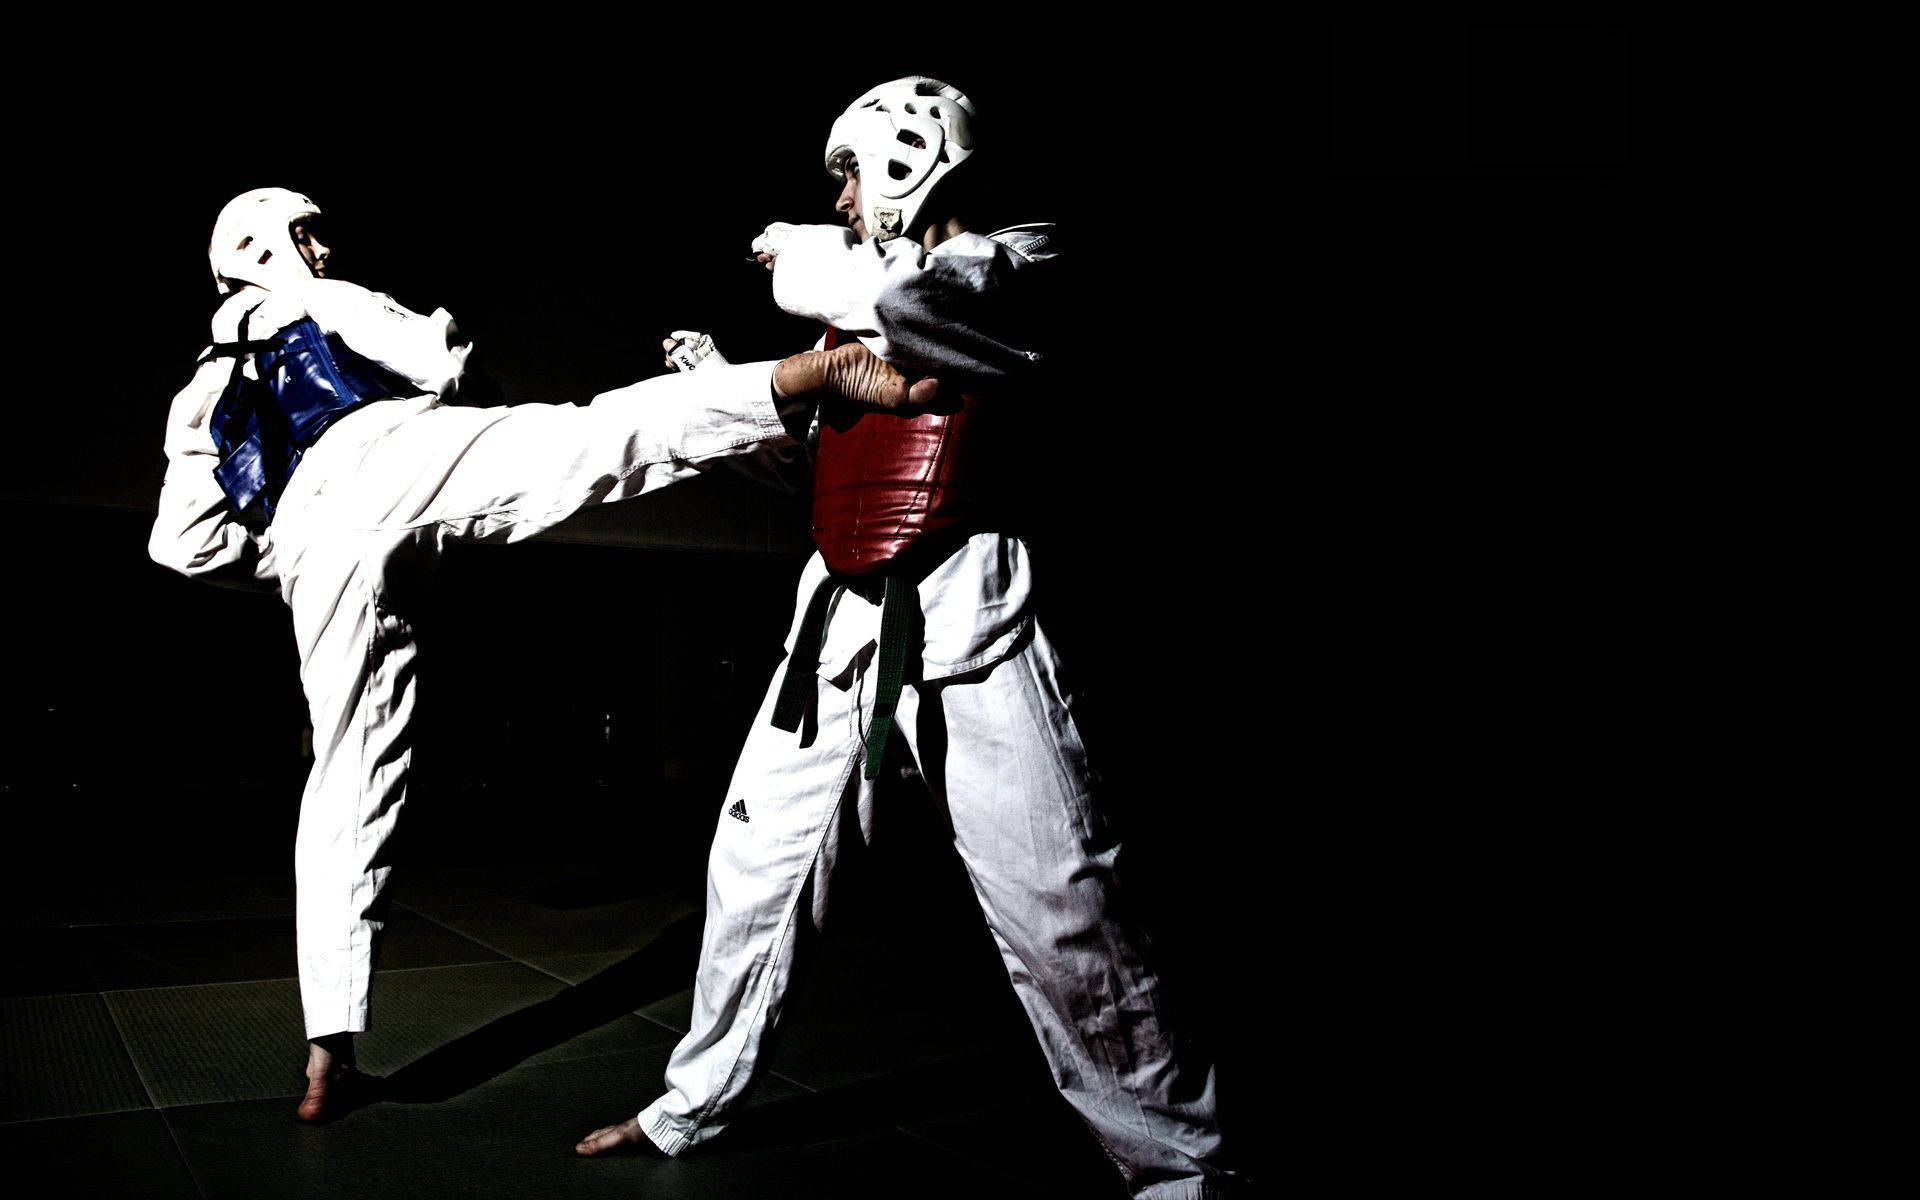 Download Dark Aesthetic Taekwondo Sport Taekwondoin Fight Wallpaper